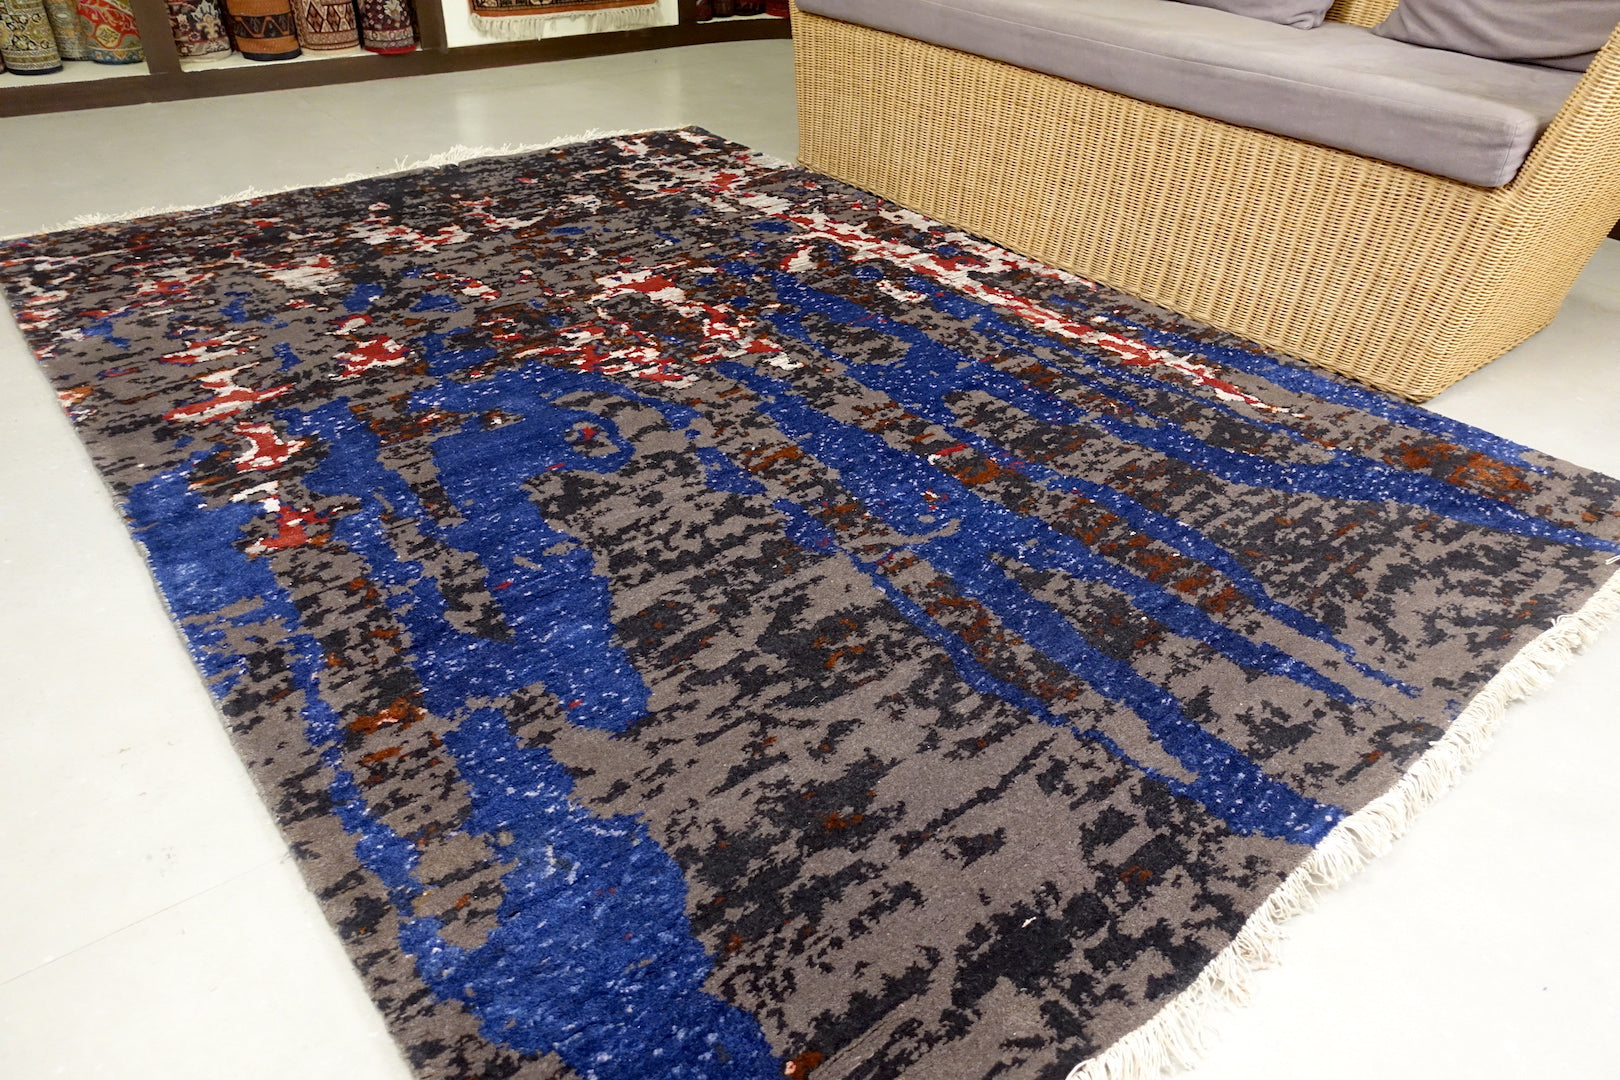 A 5 feet by 7.5 feet modern rug.